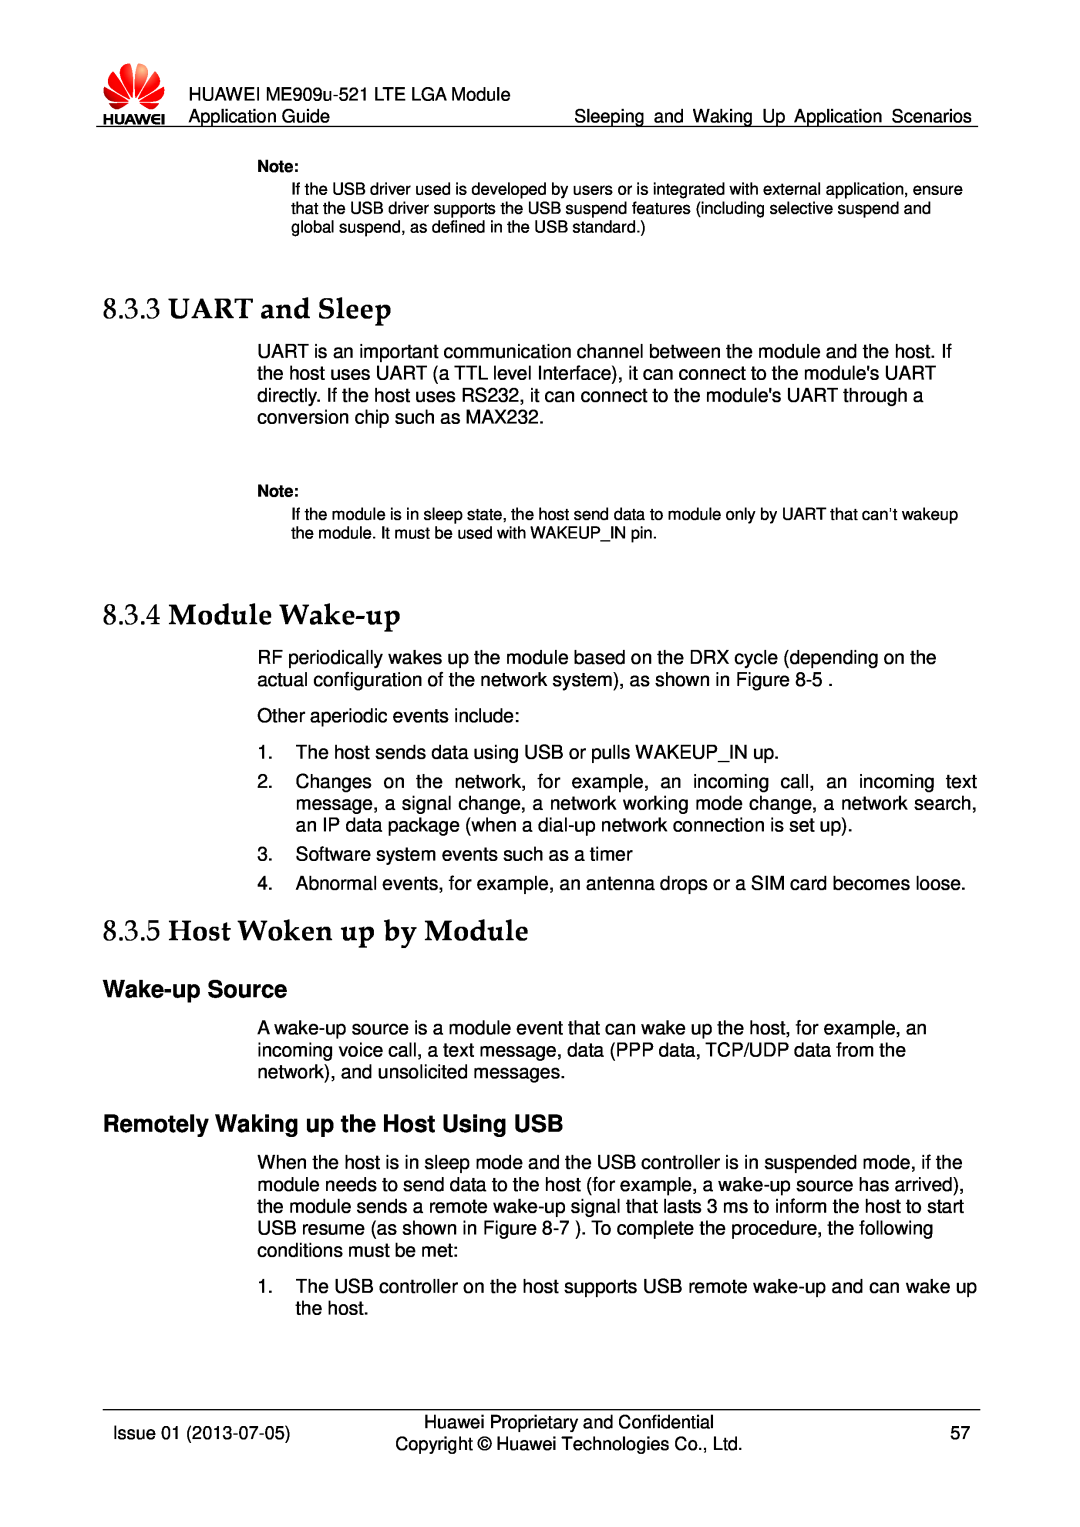 Huawei ME909u-521 manual UART and Sleep, Module Wake-up, Host Woken up by Module, Wake-up Source 